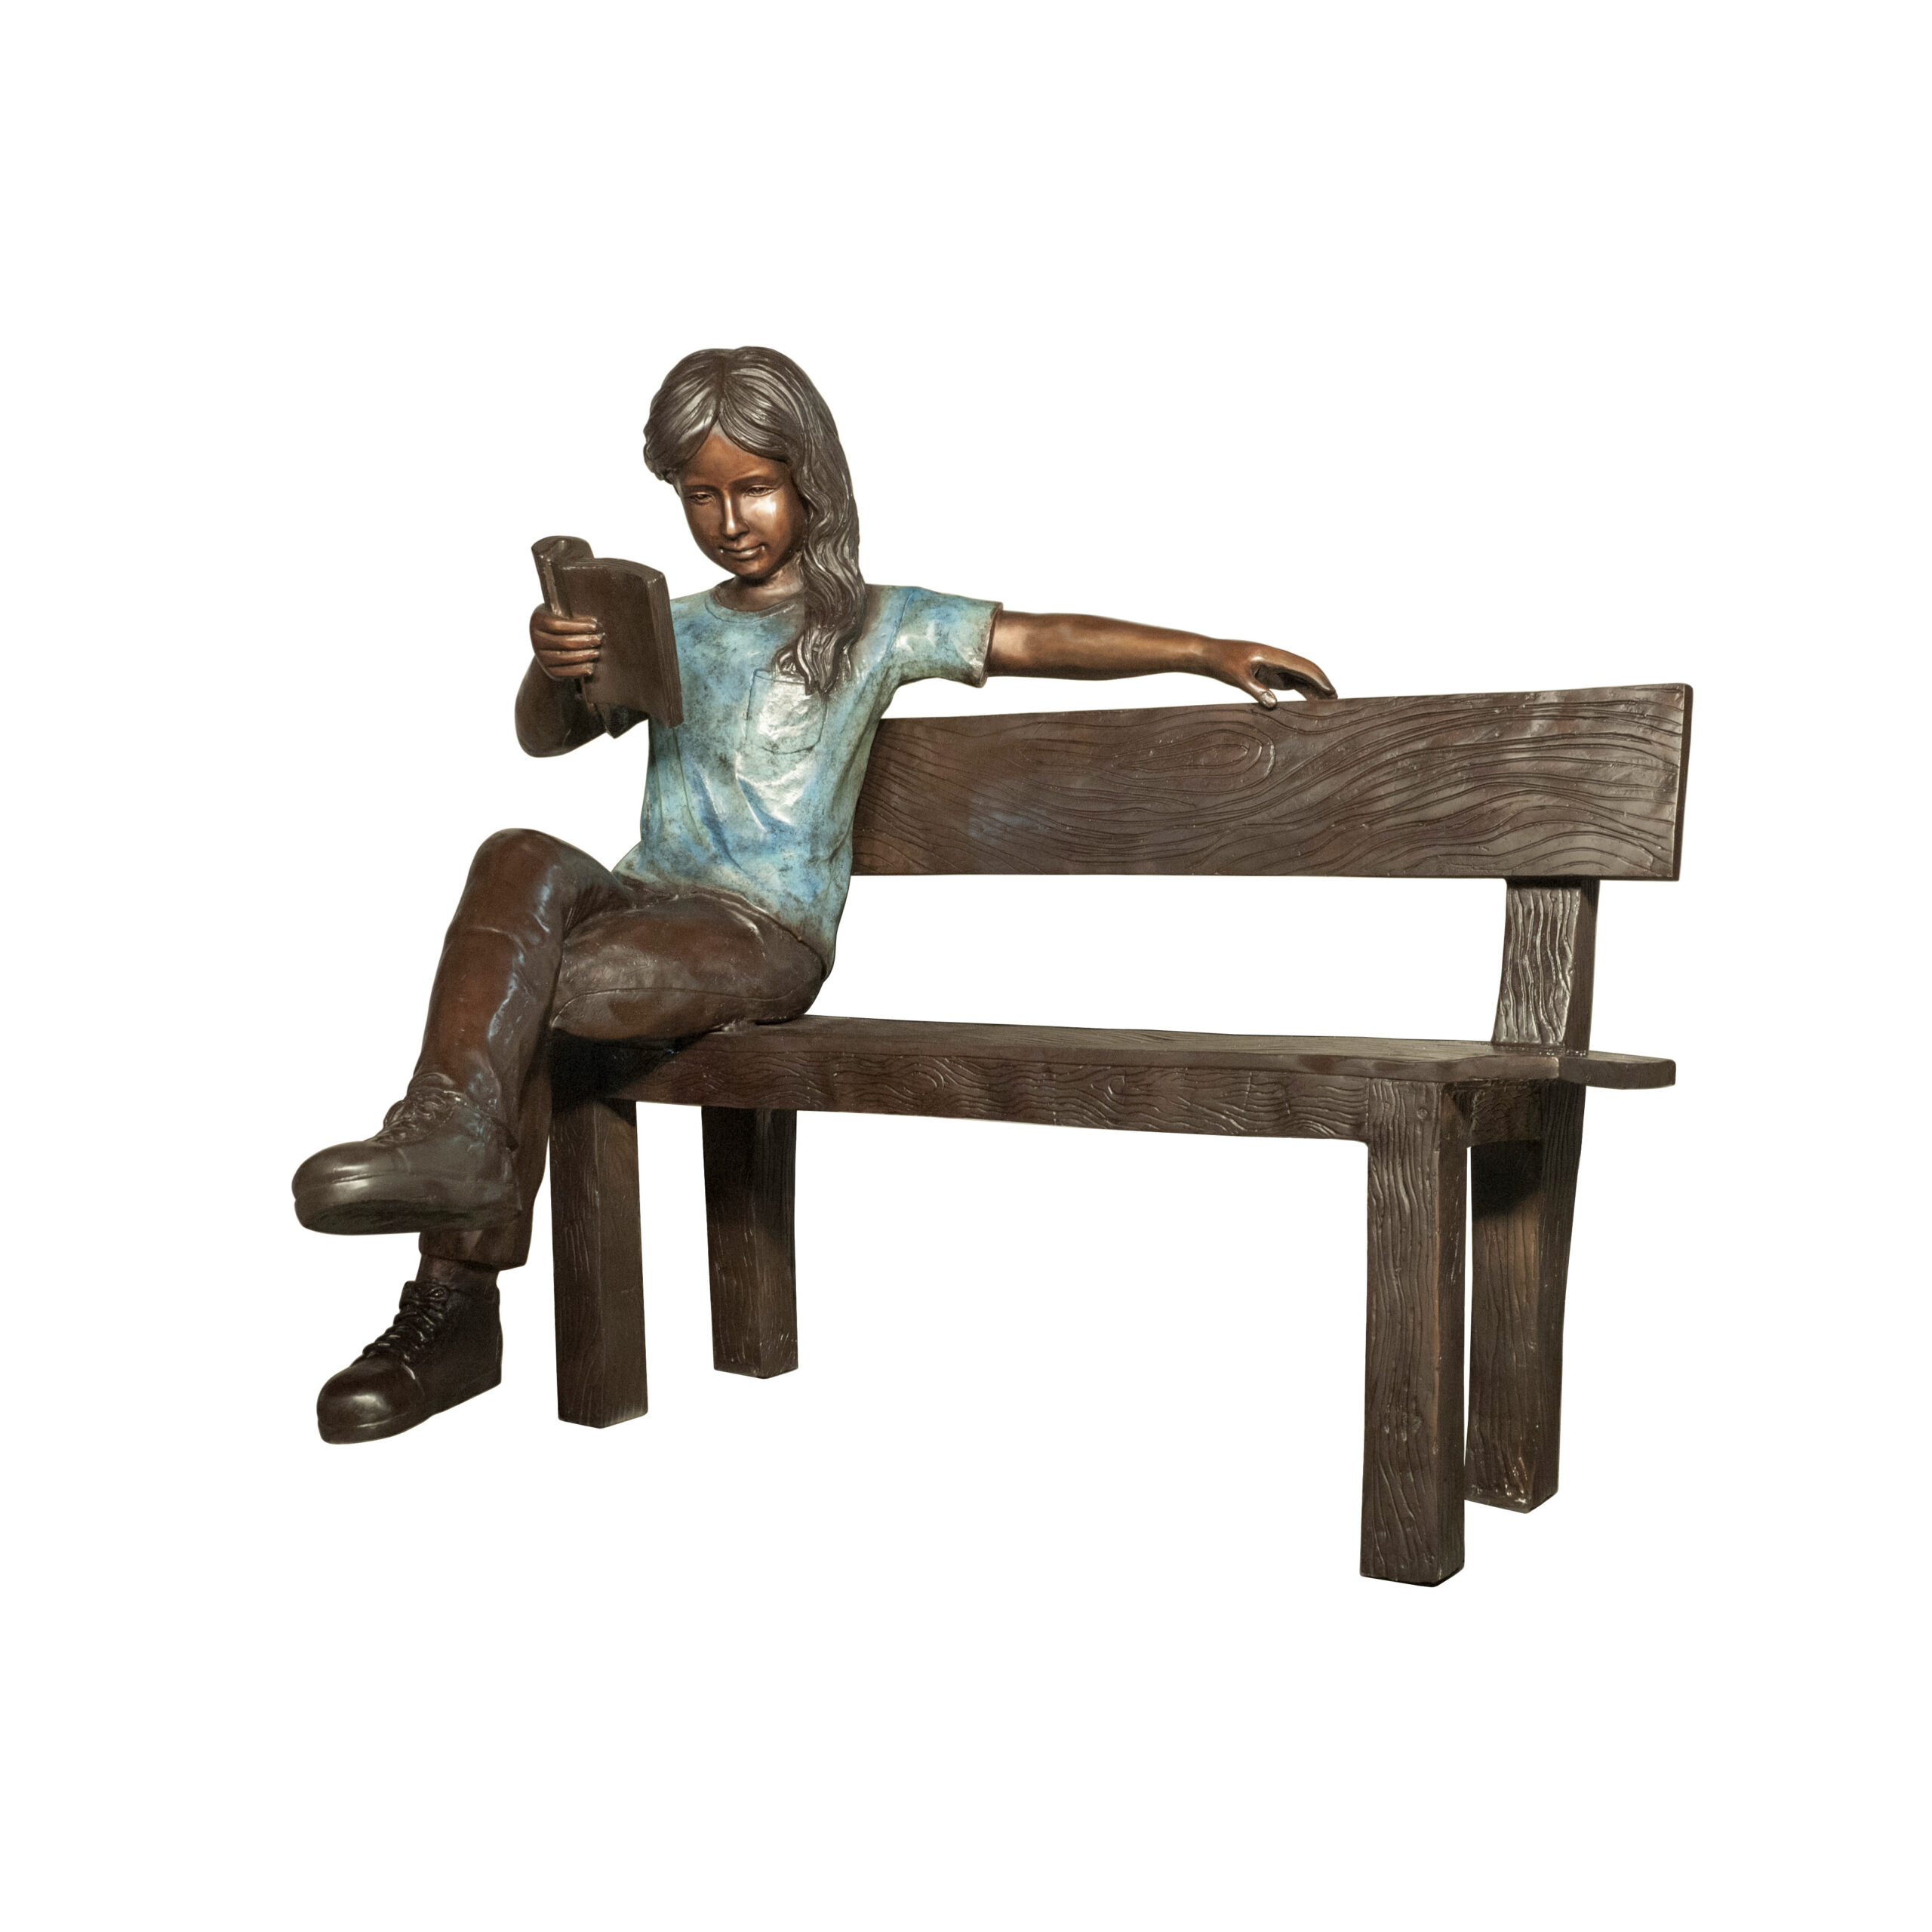 SRB058688 Bronze Girl Reading Book on Bench Sculpture by Metropolitan Galleries Inc